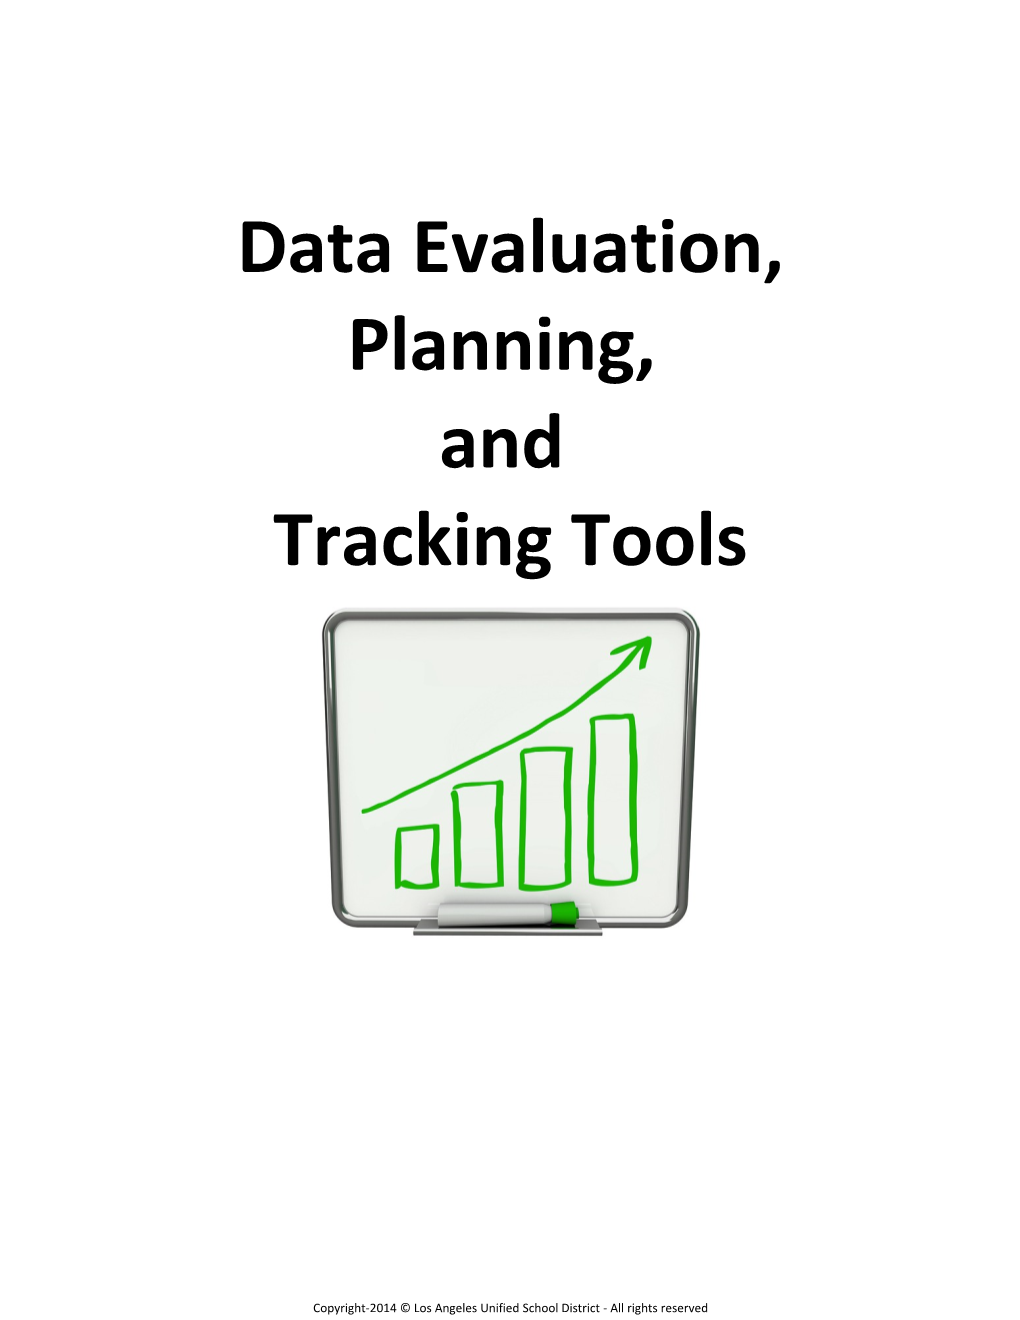 Data Evaluation, Planning